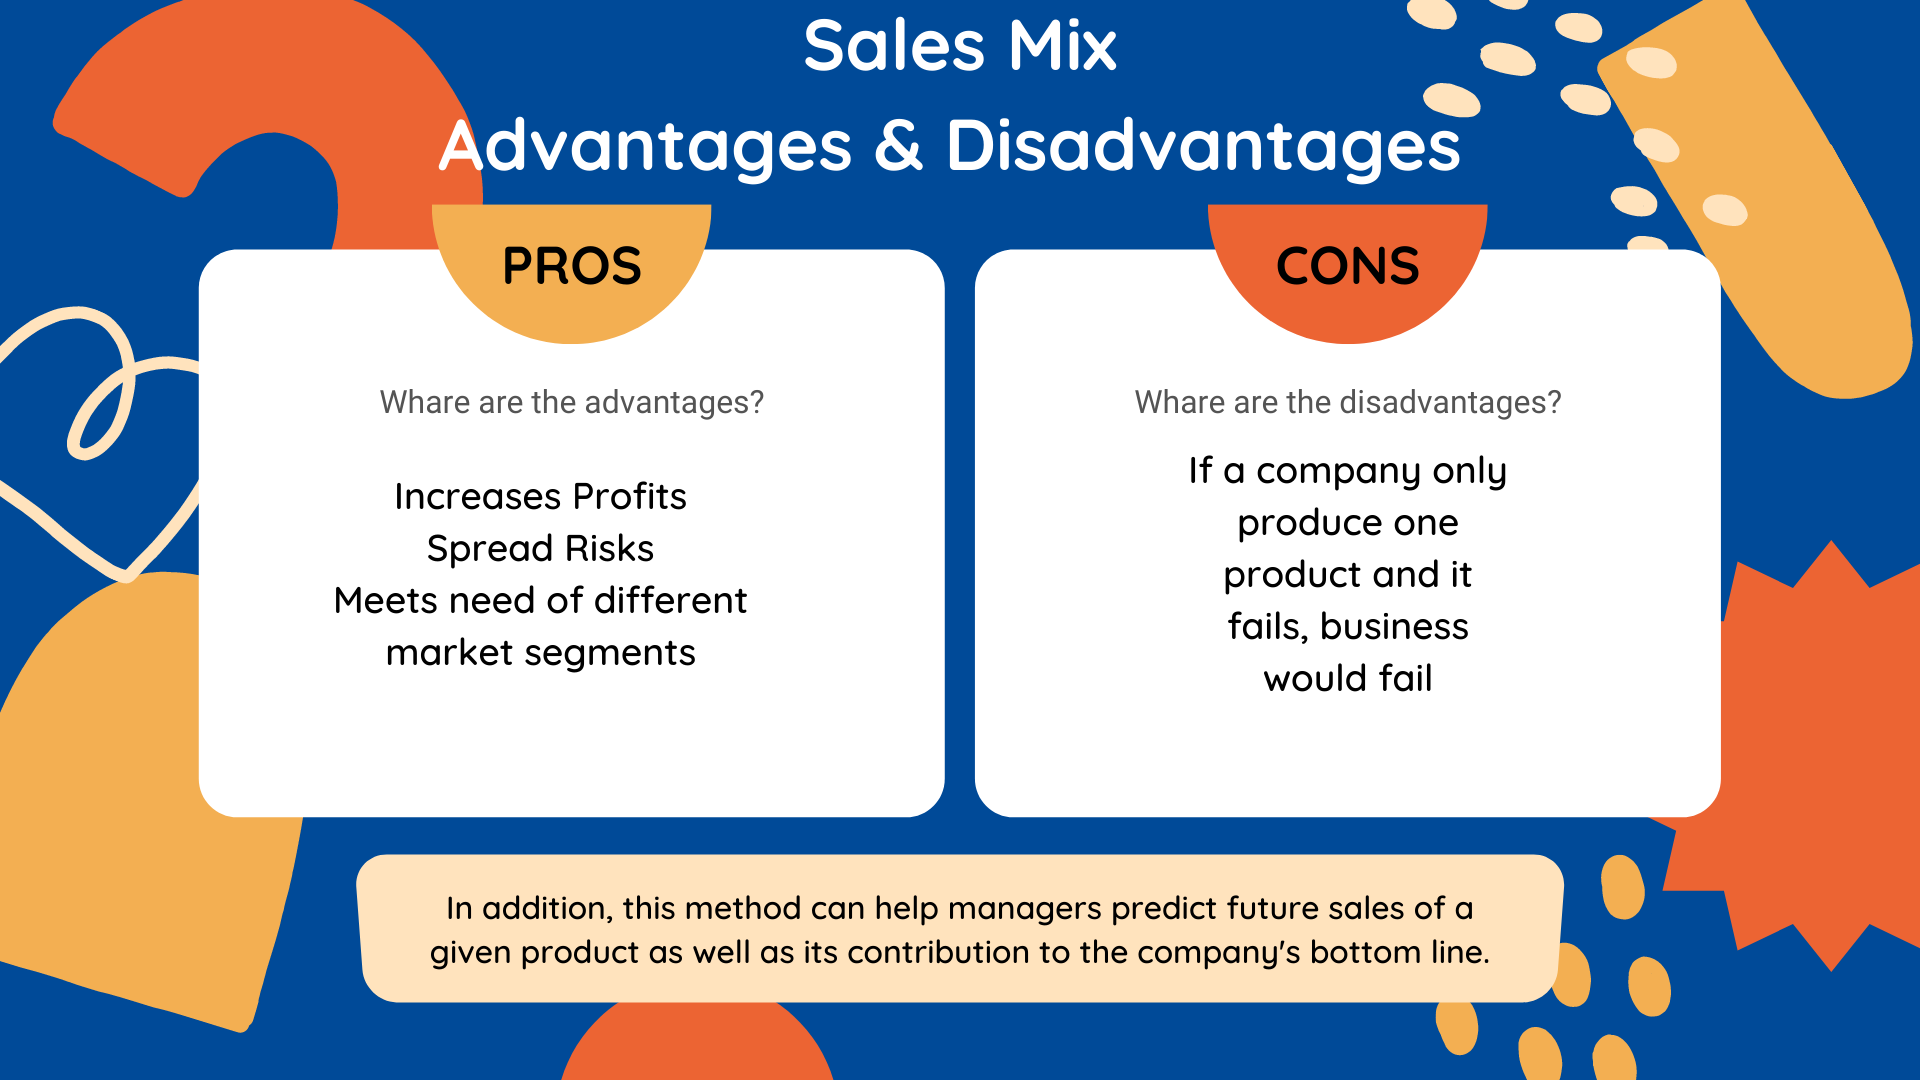 sales presentation mix definition